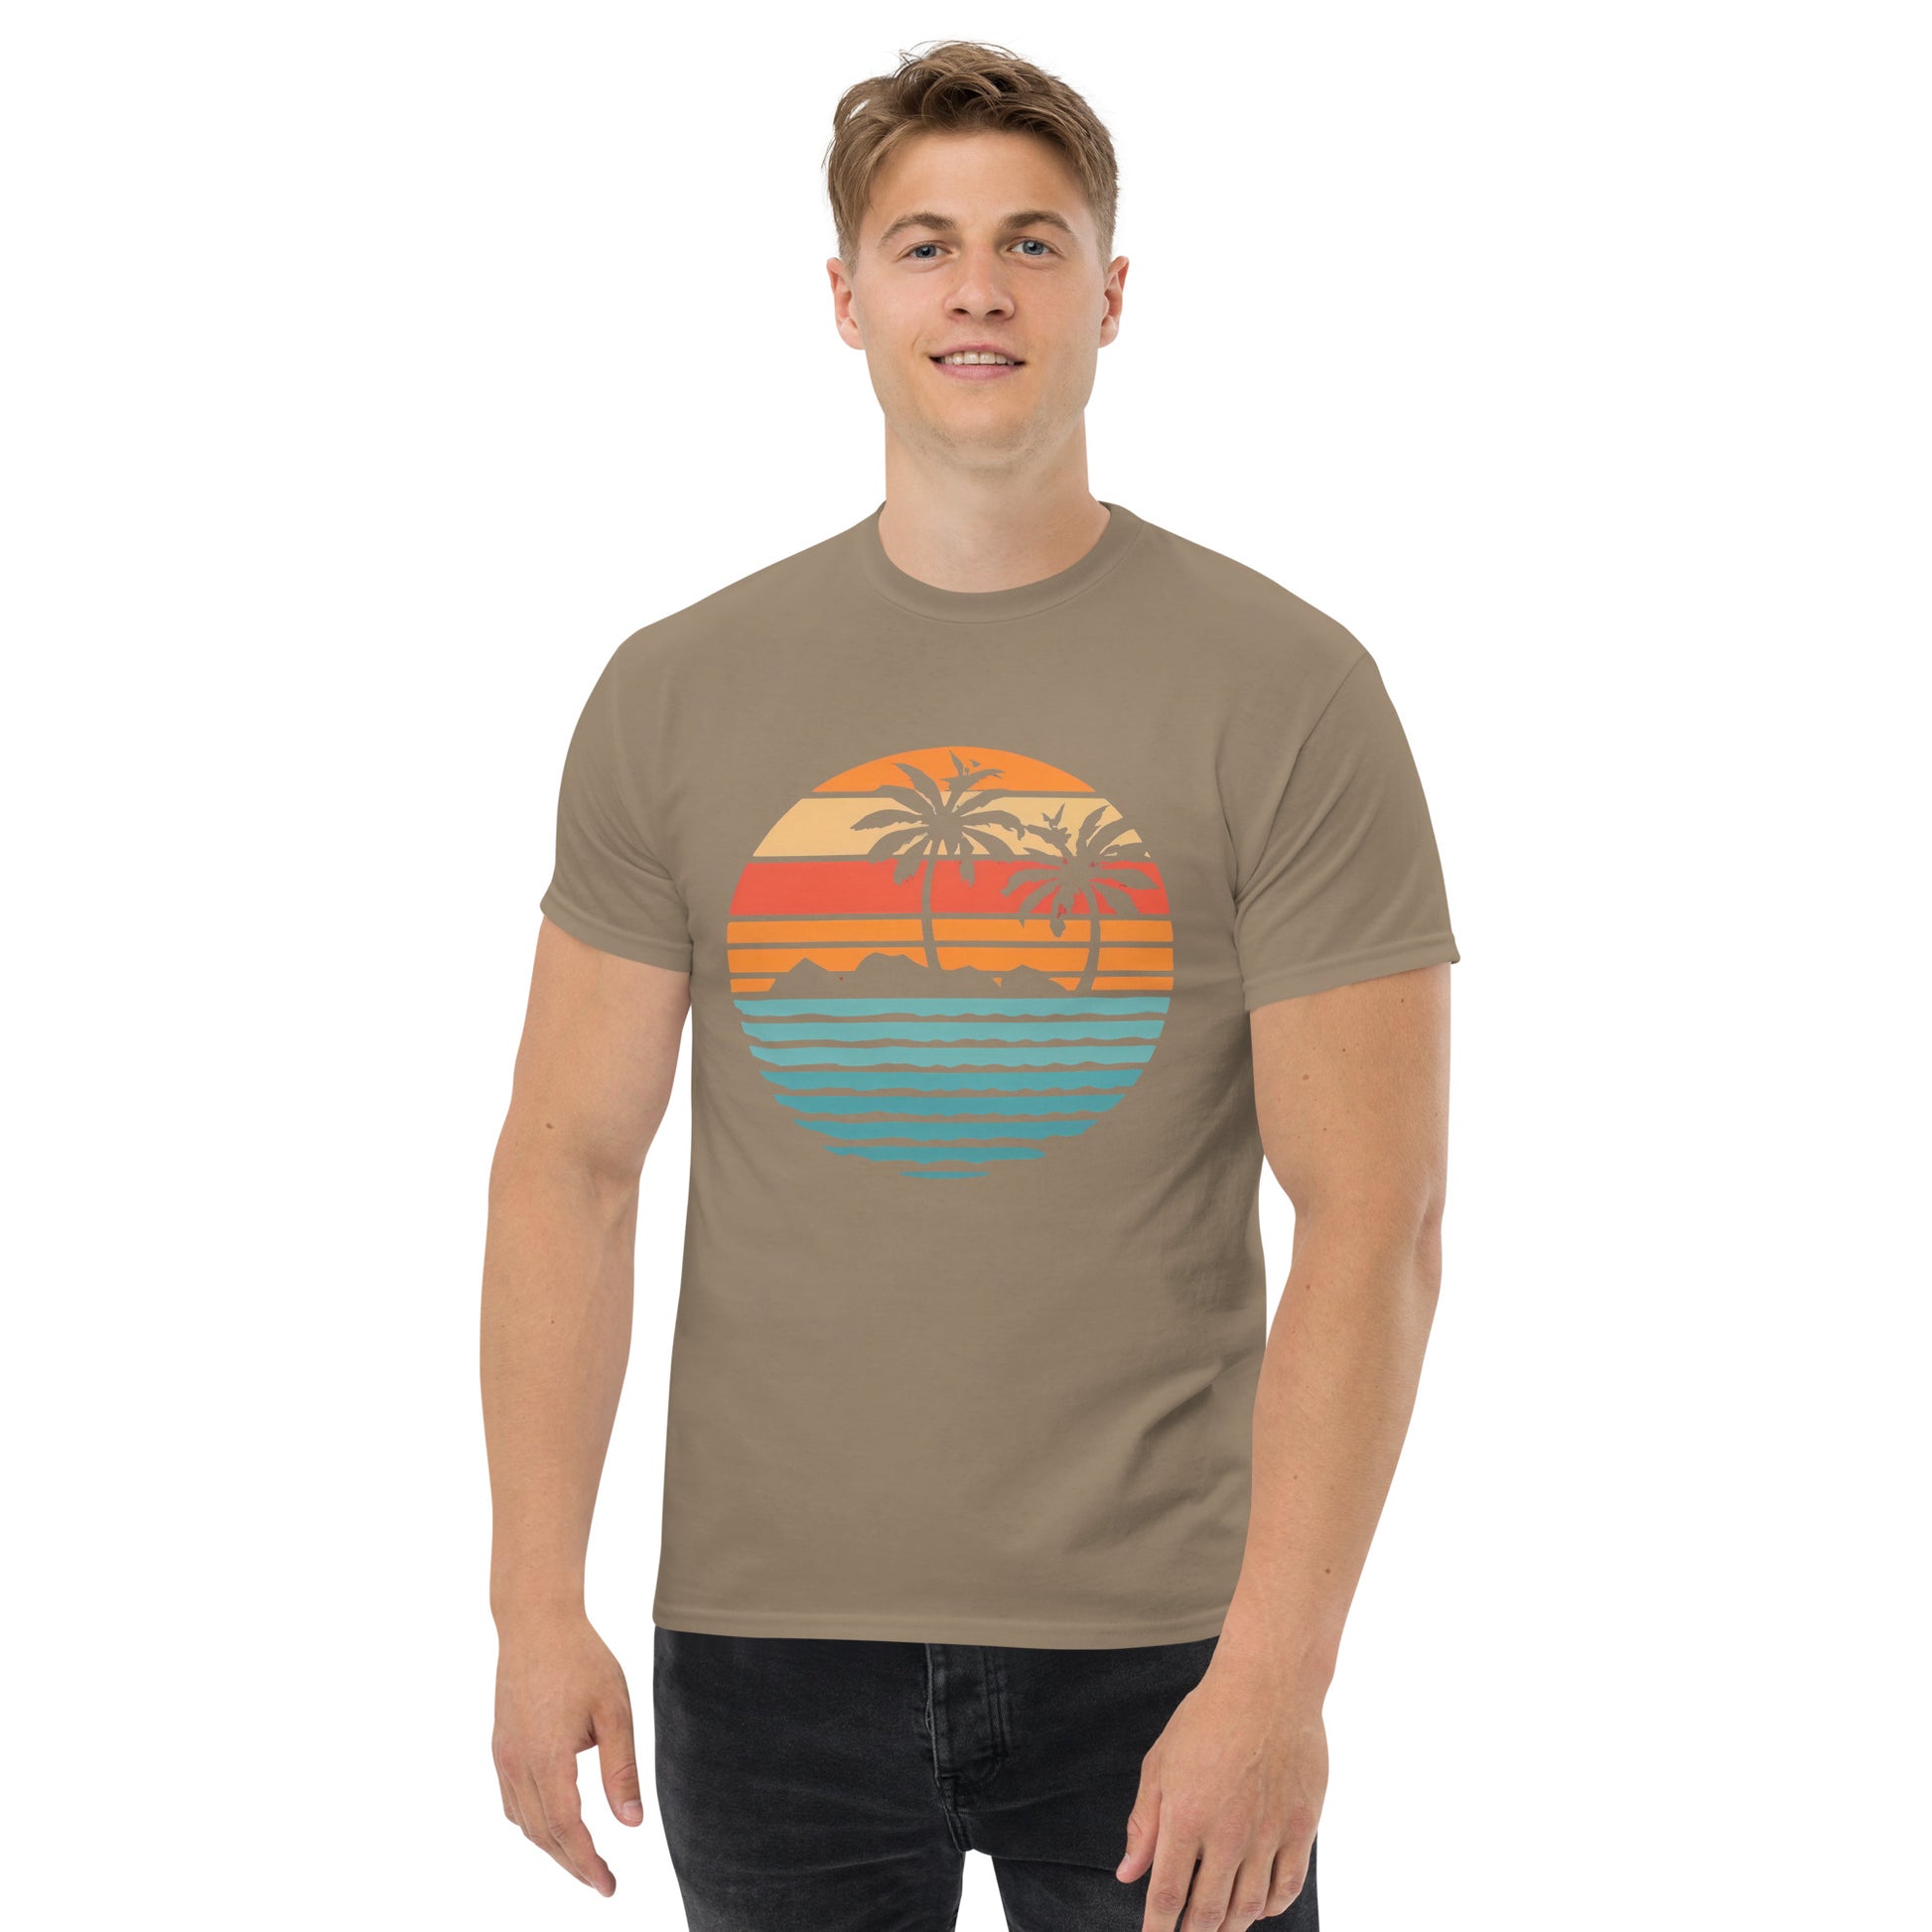 Men with savana brown T-shirt and a retro Island